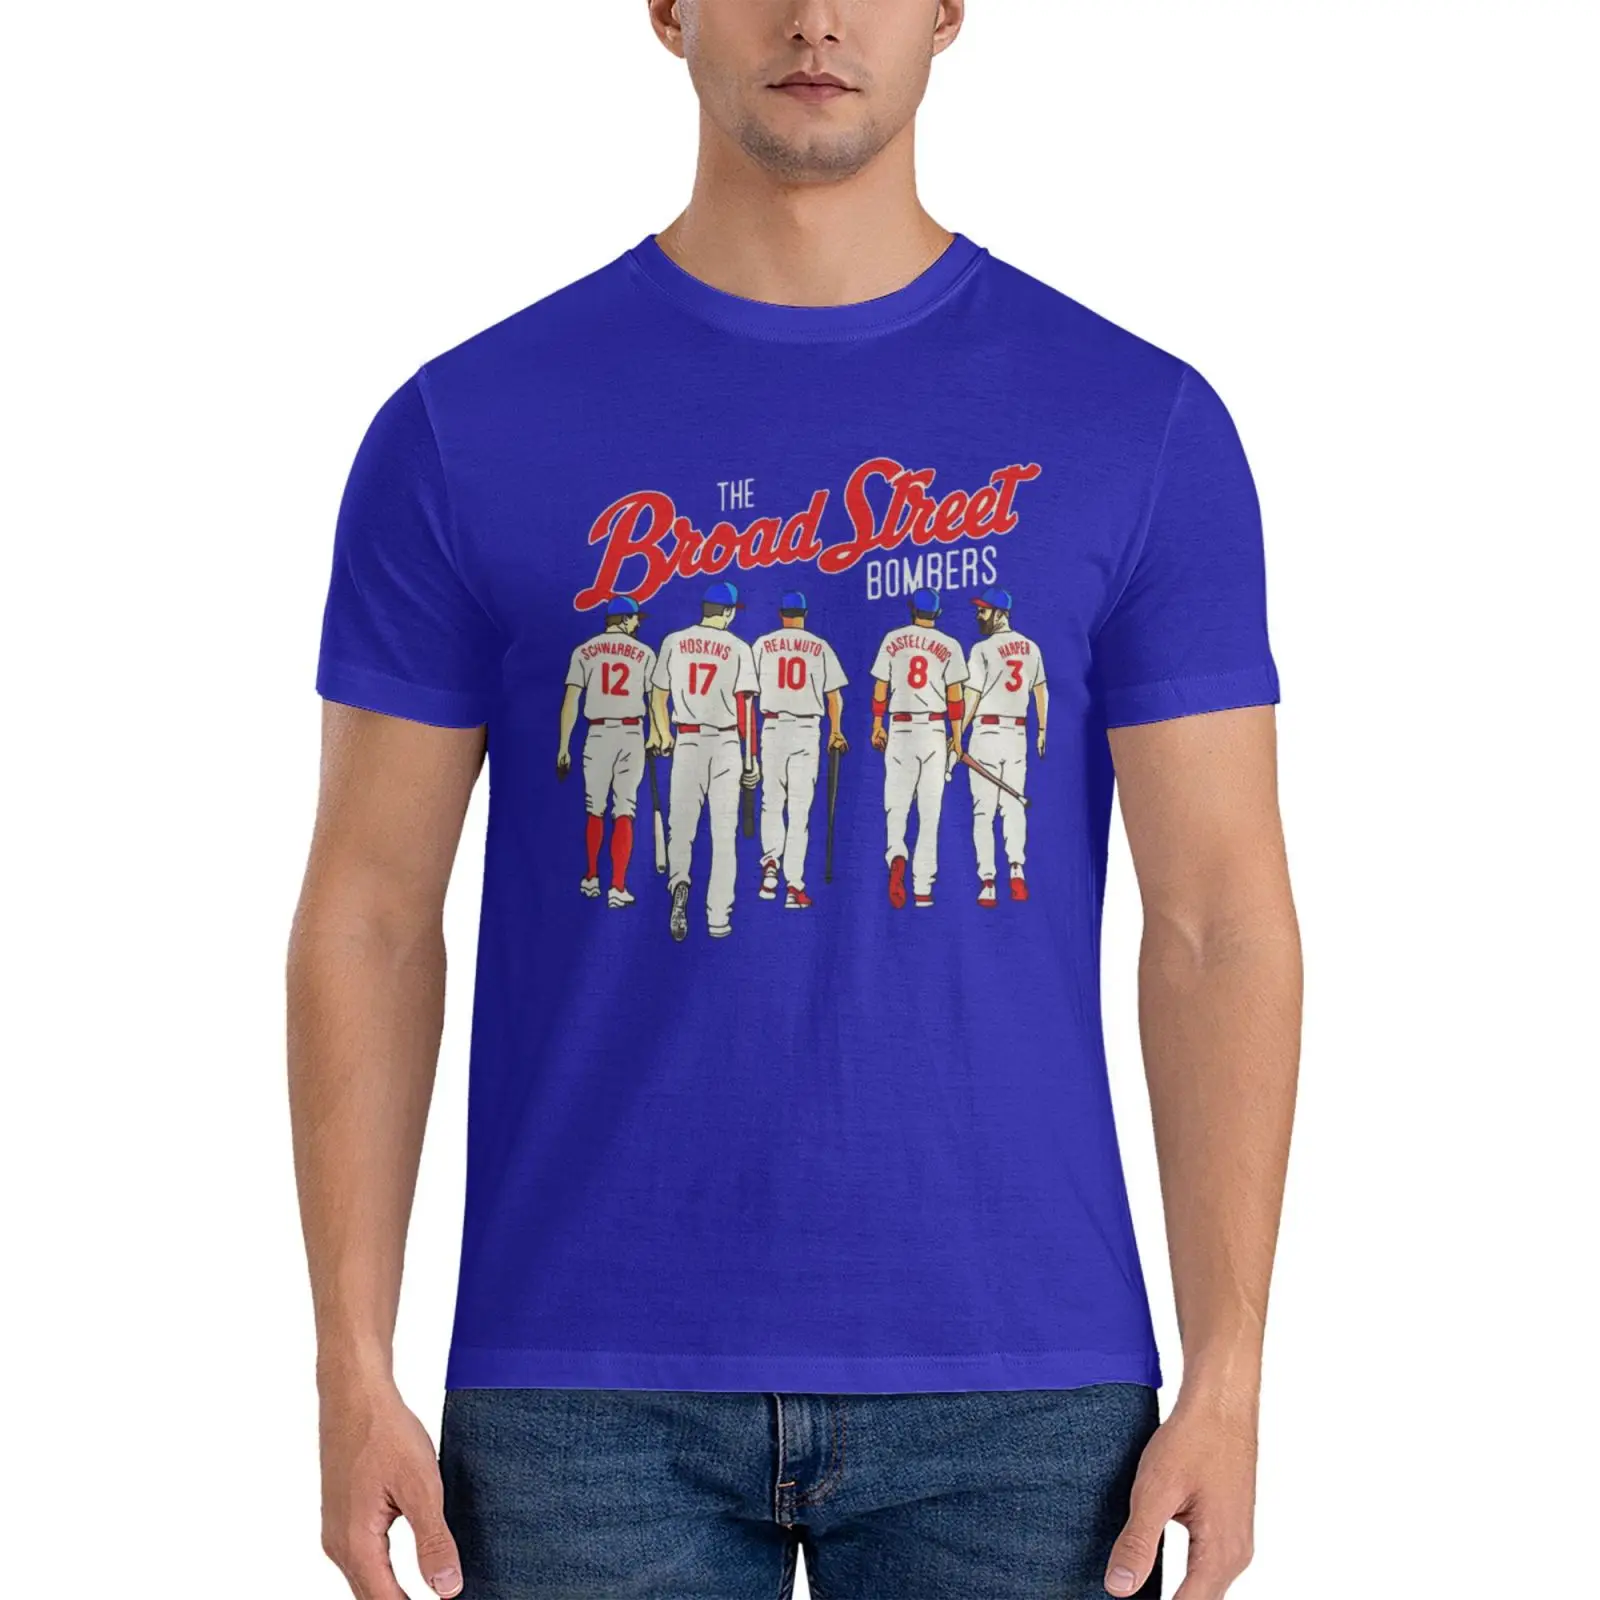 The broad street Bombers Незаменимая футболка, одежда для хиппи, мужская футболка, графические пустые футболки, мужская футболка